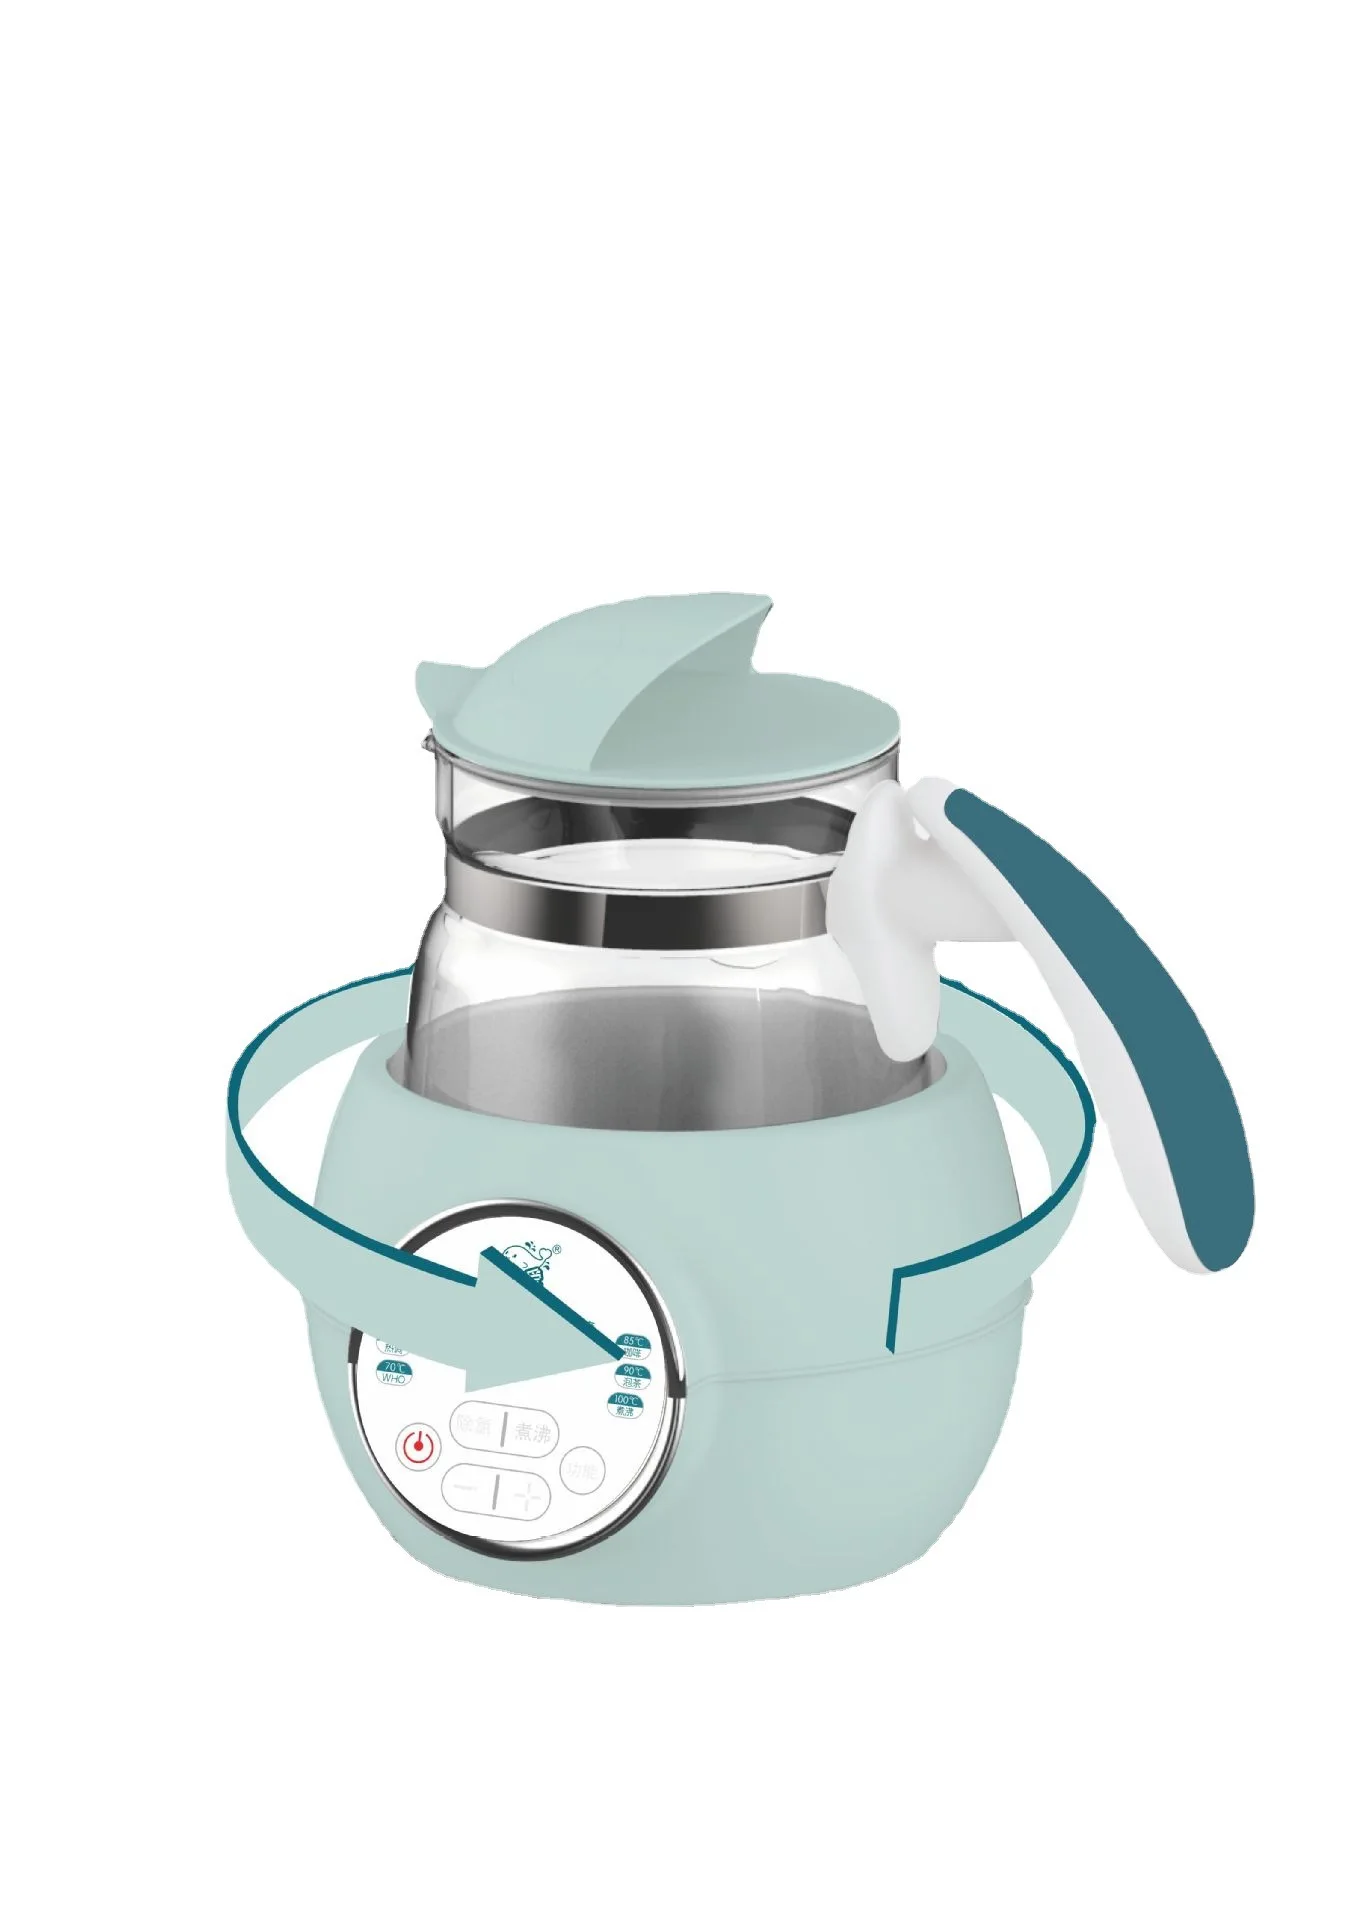 Baby Electric Milk Modulator Milk Warmer Thermal Flask Portable Milk Heater Milk Warmer Kettle Constant Temperature enlarge